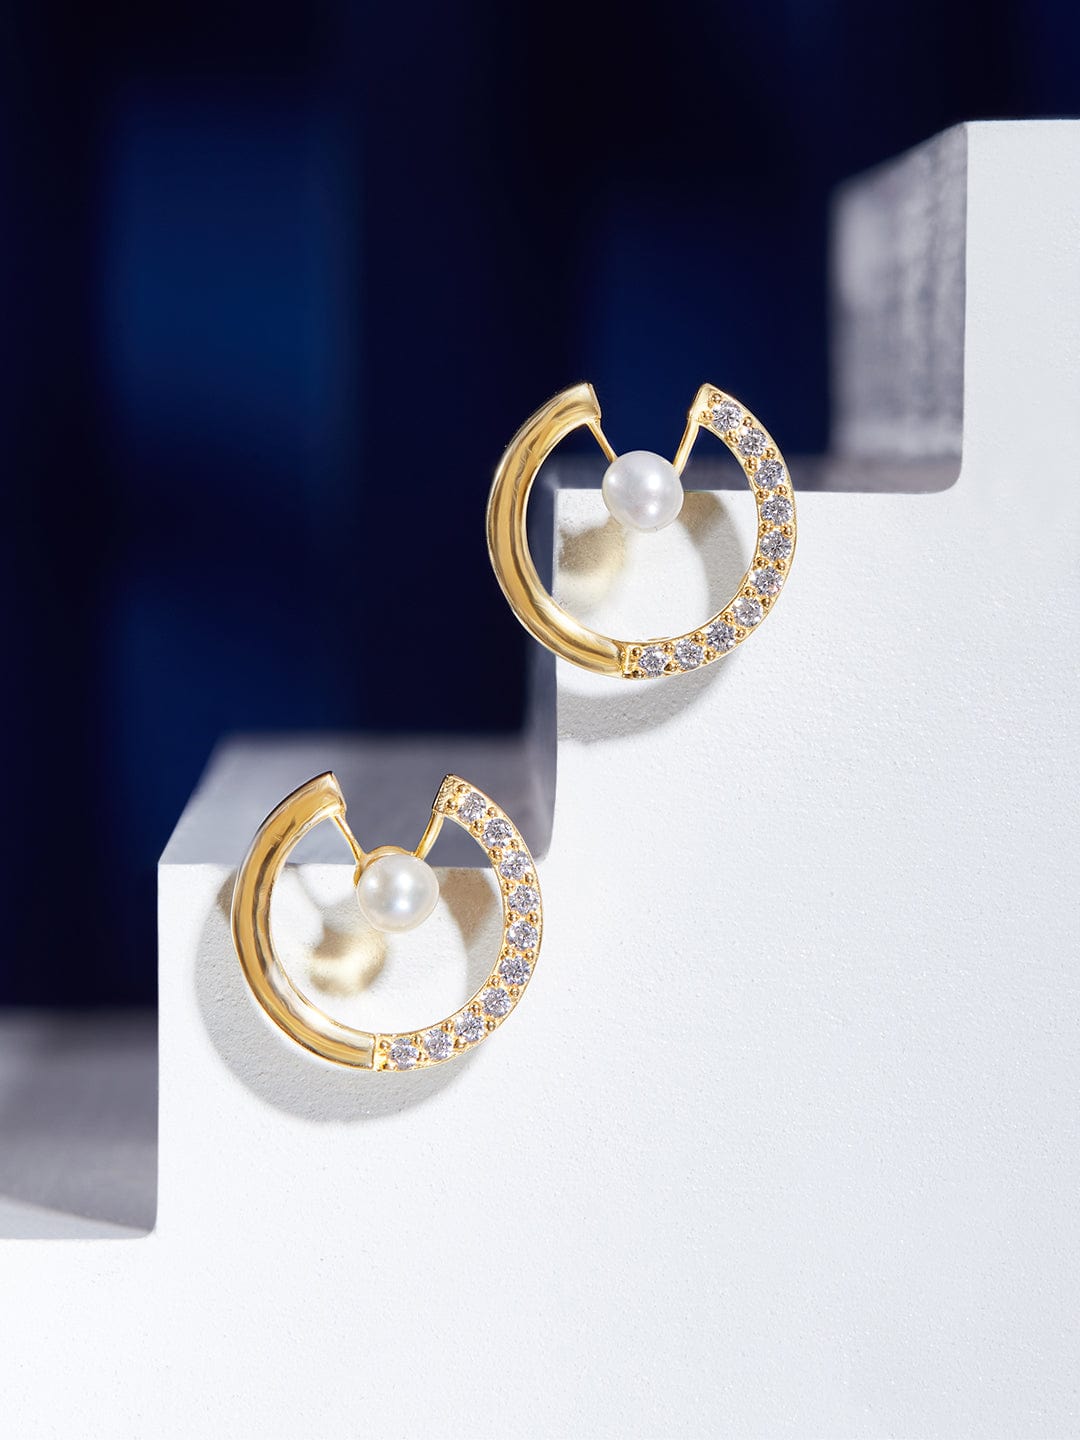 Rubans 925 Silver Asymmetrical Merge Of Pearls And Zirconia Stud Earrings.- Gold Plated Earrings